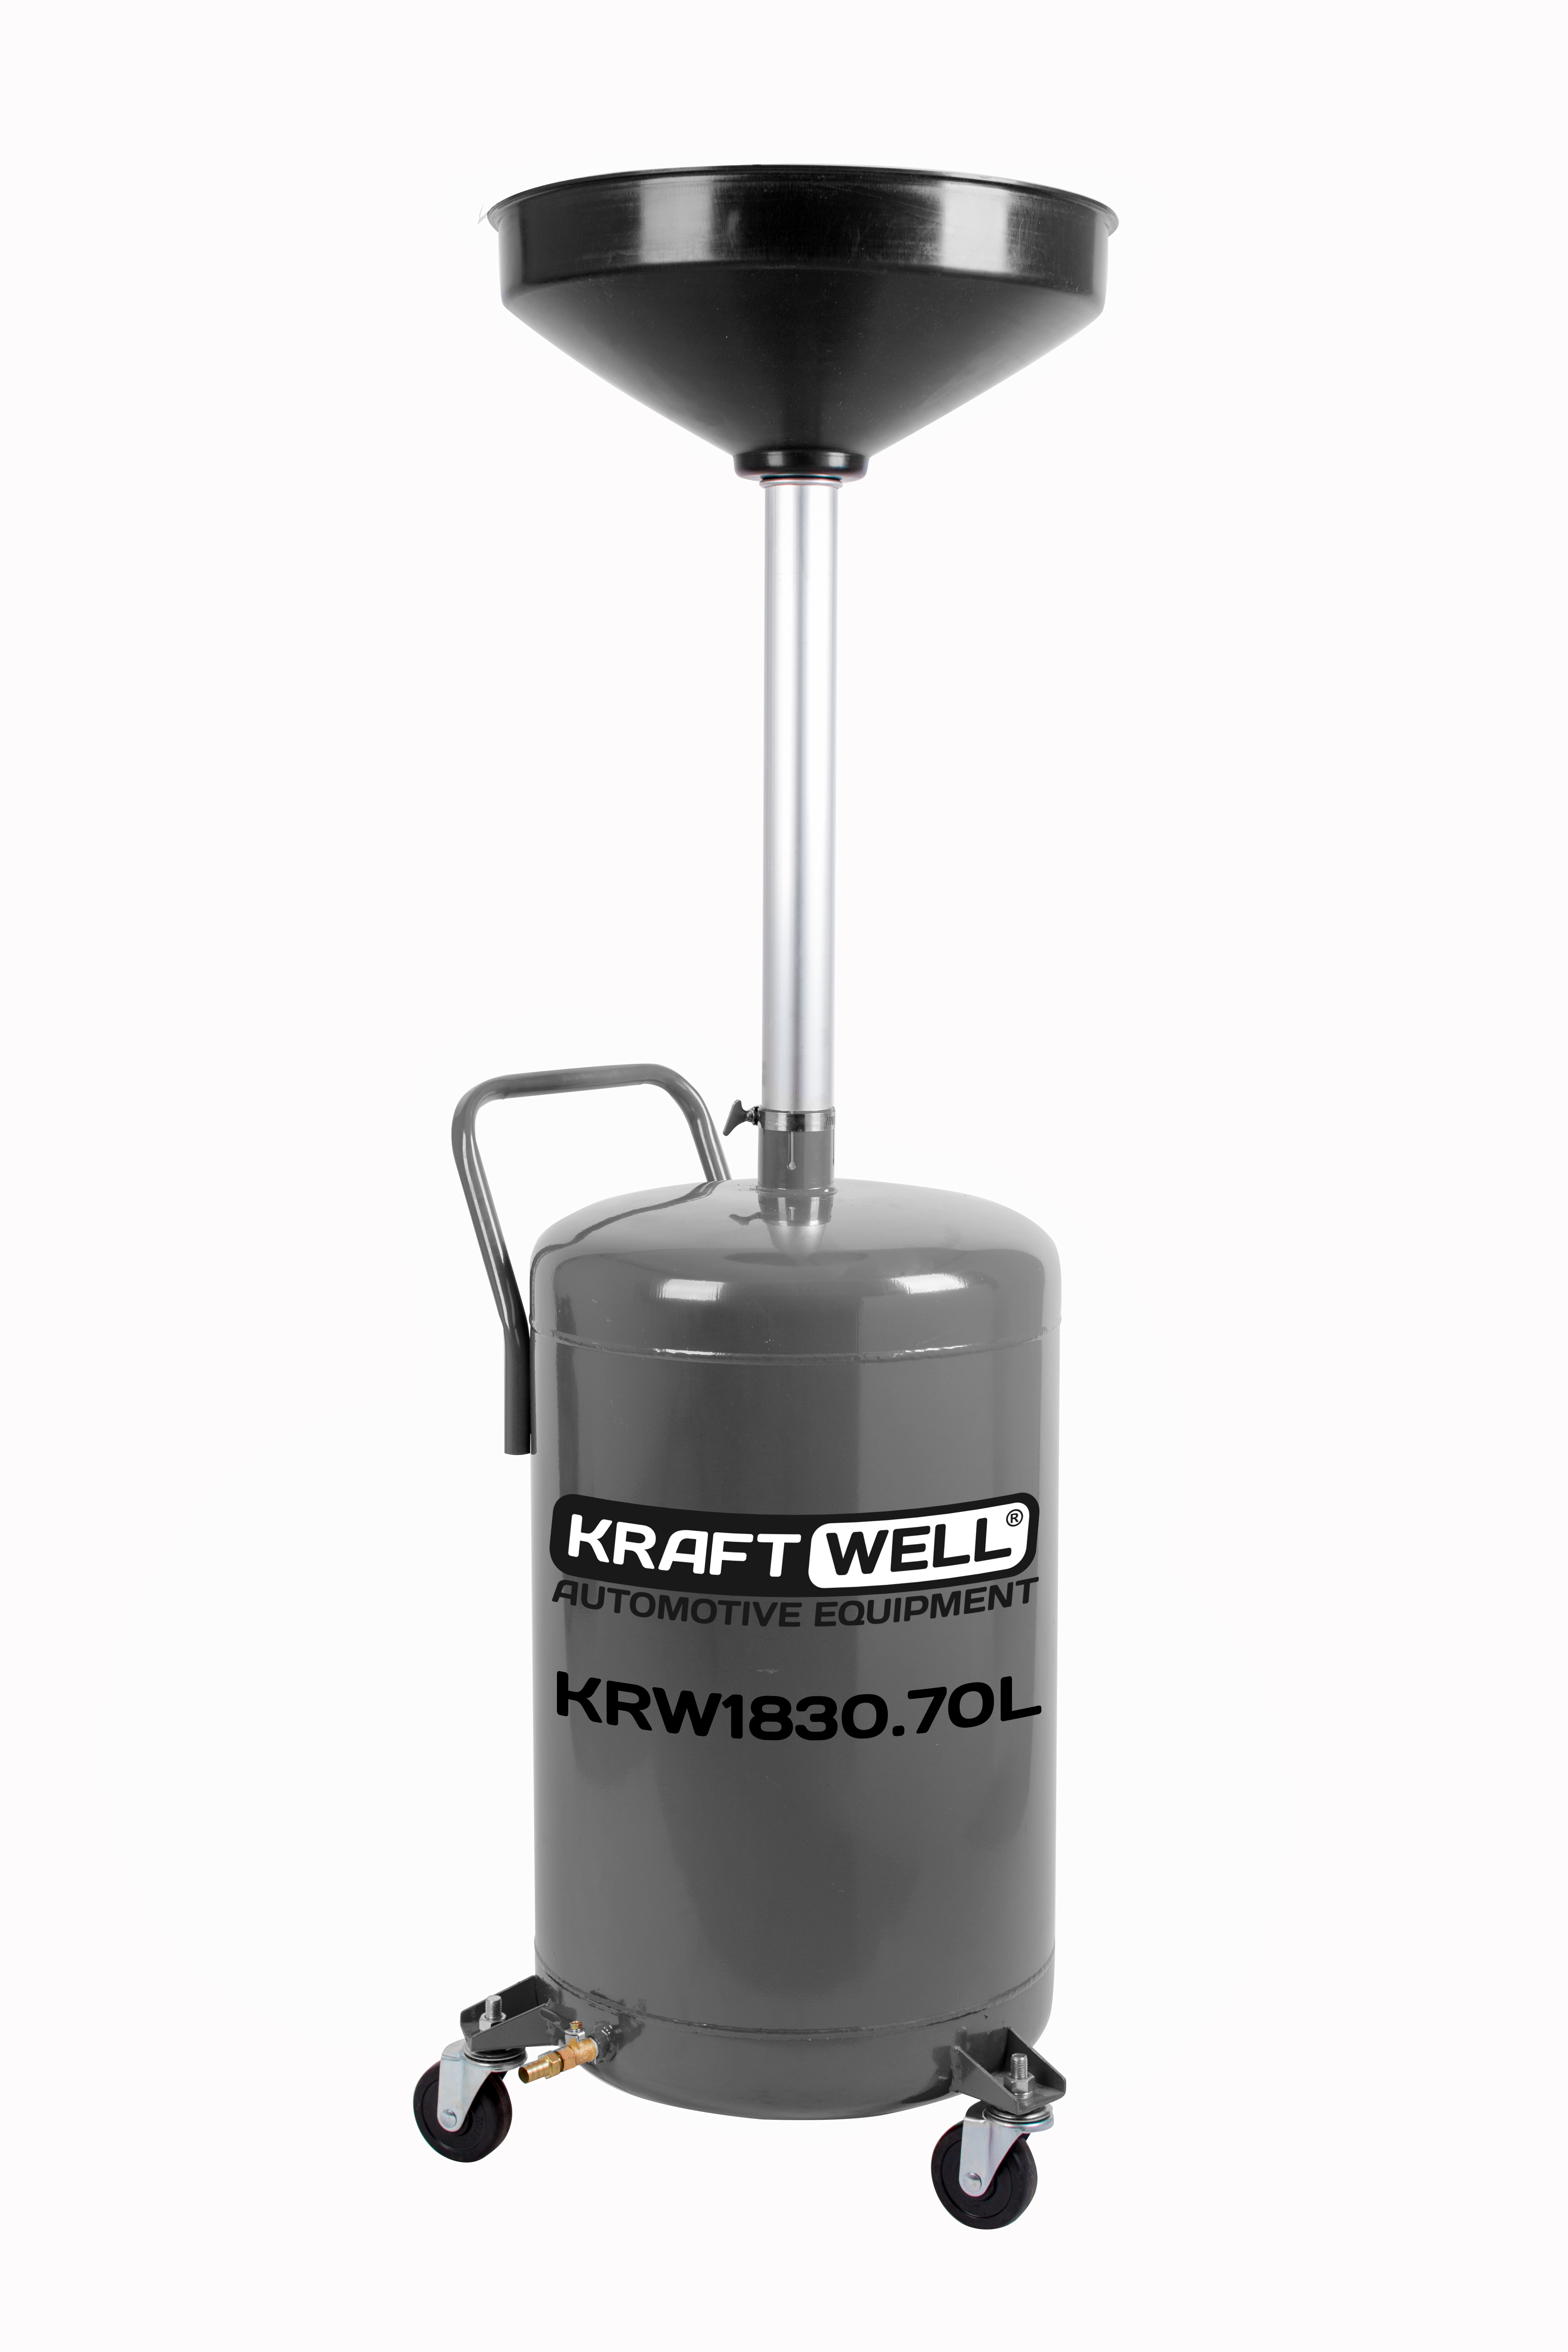 KraftWell KRW1830.70L Установка для слива масла/антифриза с круглой подъемной ванной, мобильная, объем 70 л